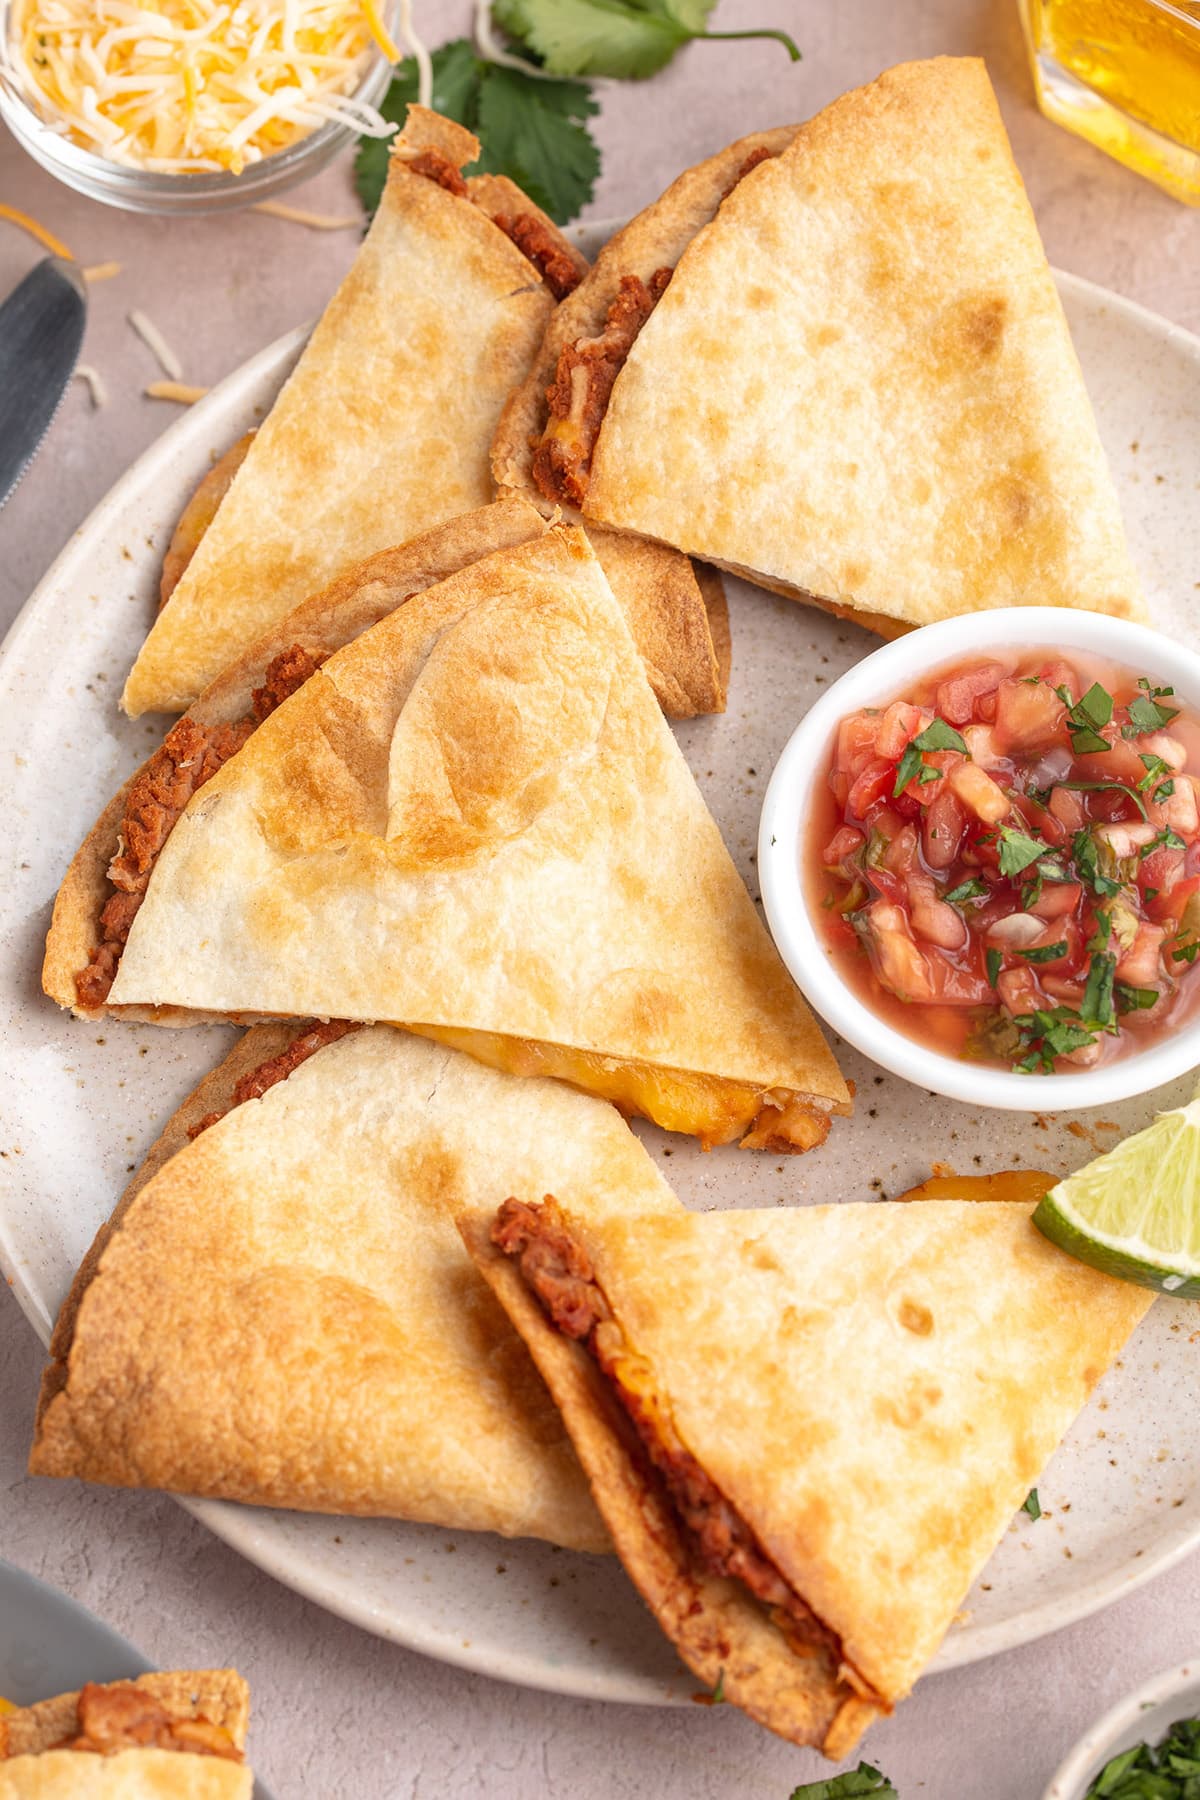 Triangular slices of air fryer quesadillas on a plate with a ramekin of salsa.